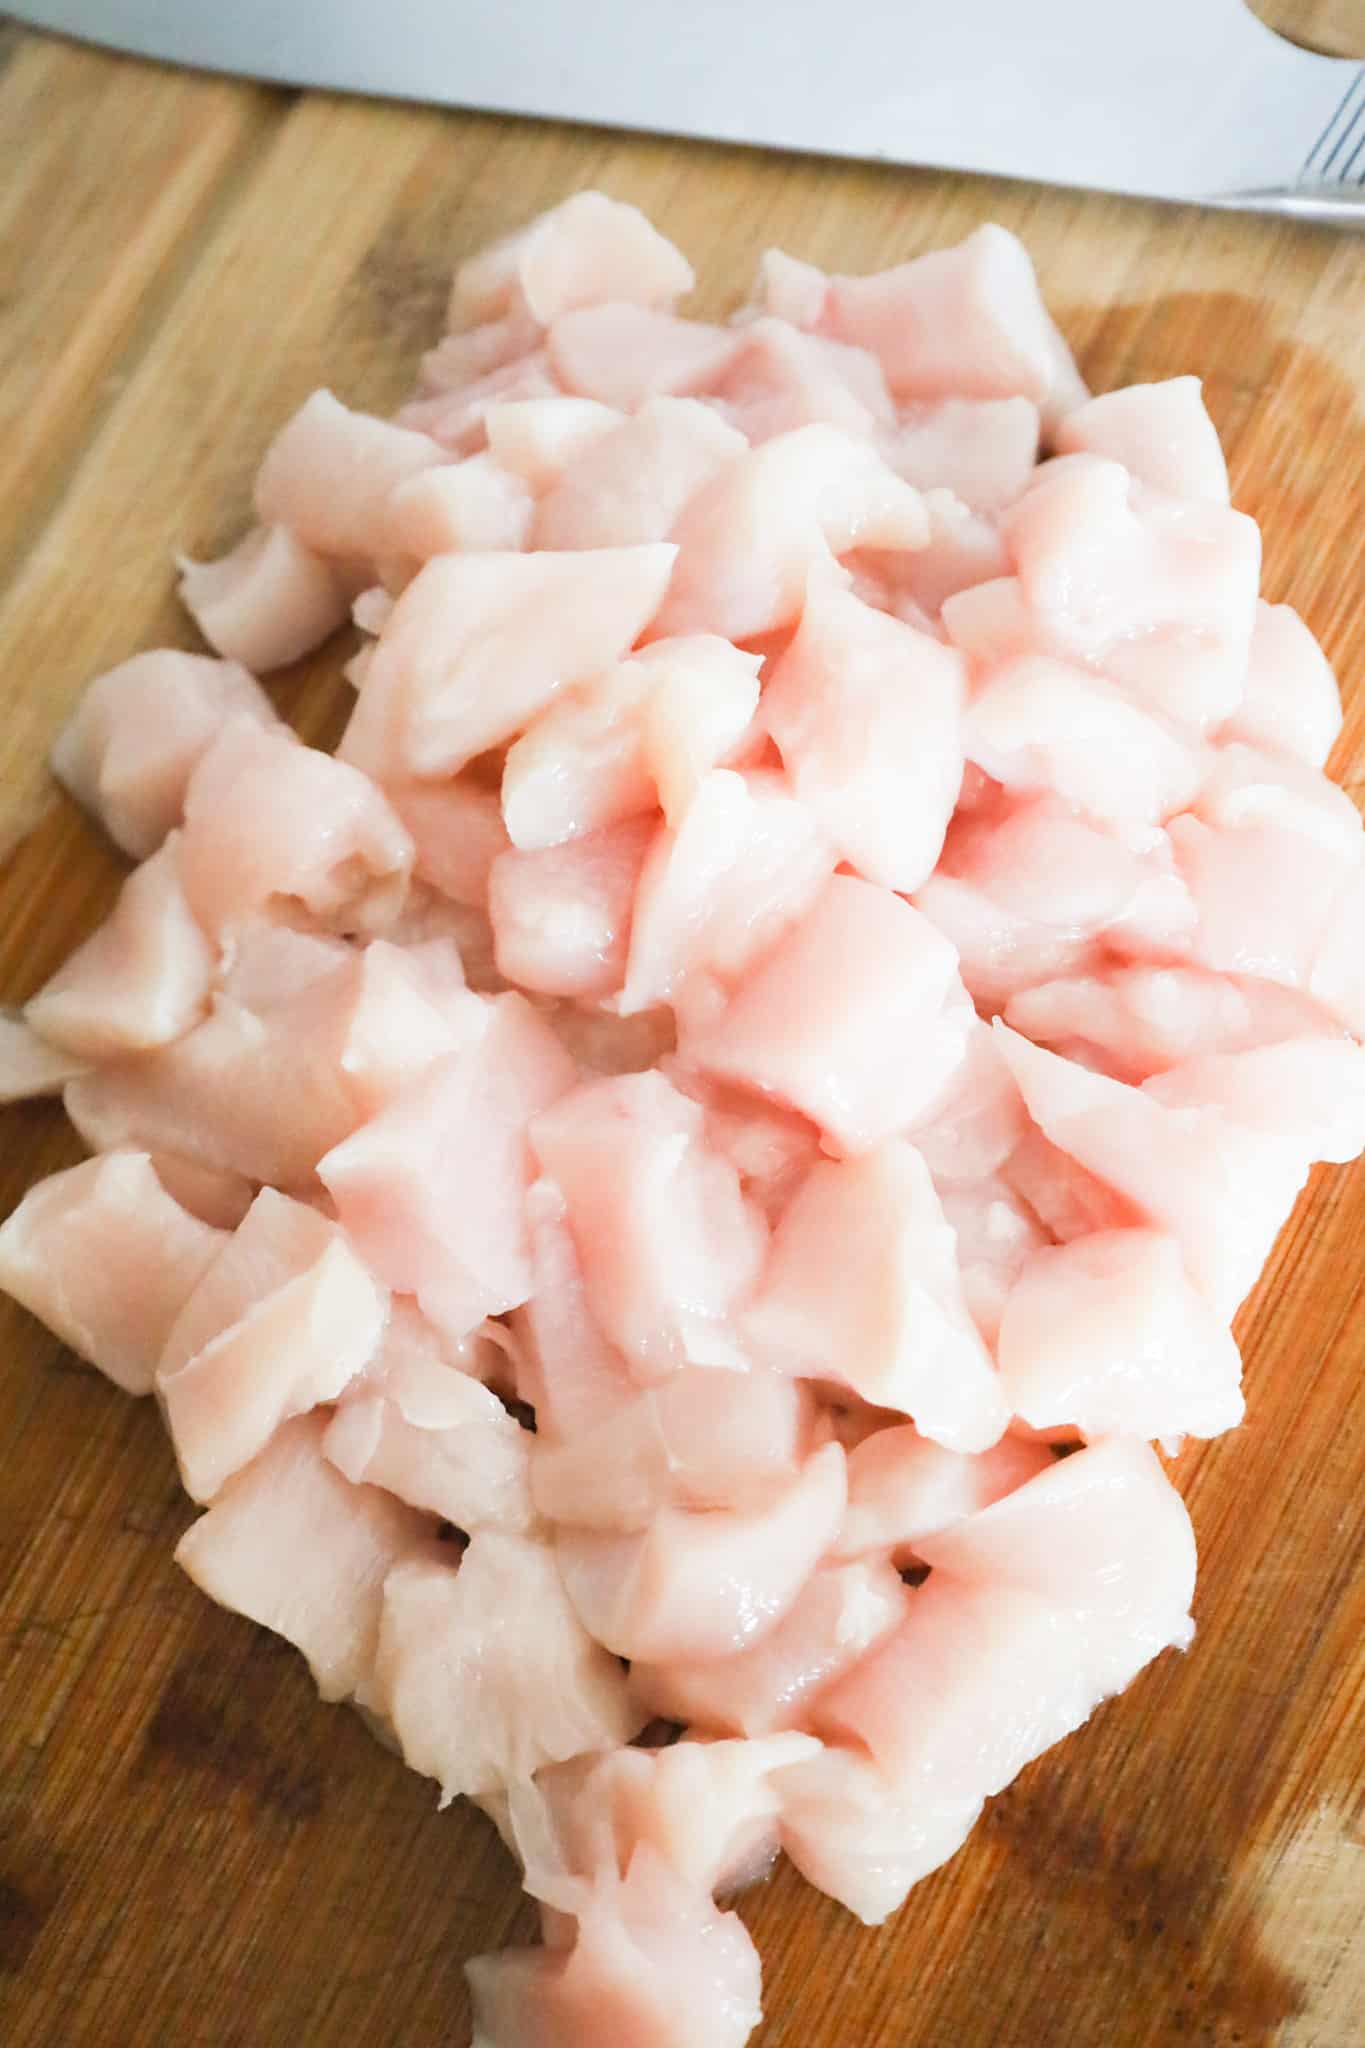 raw diced chicken breast on a cutting board